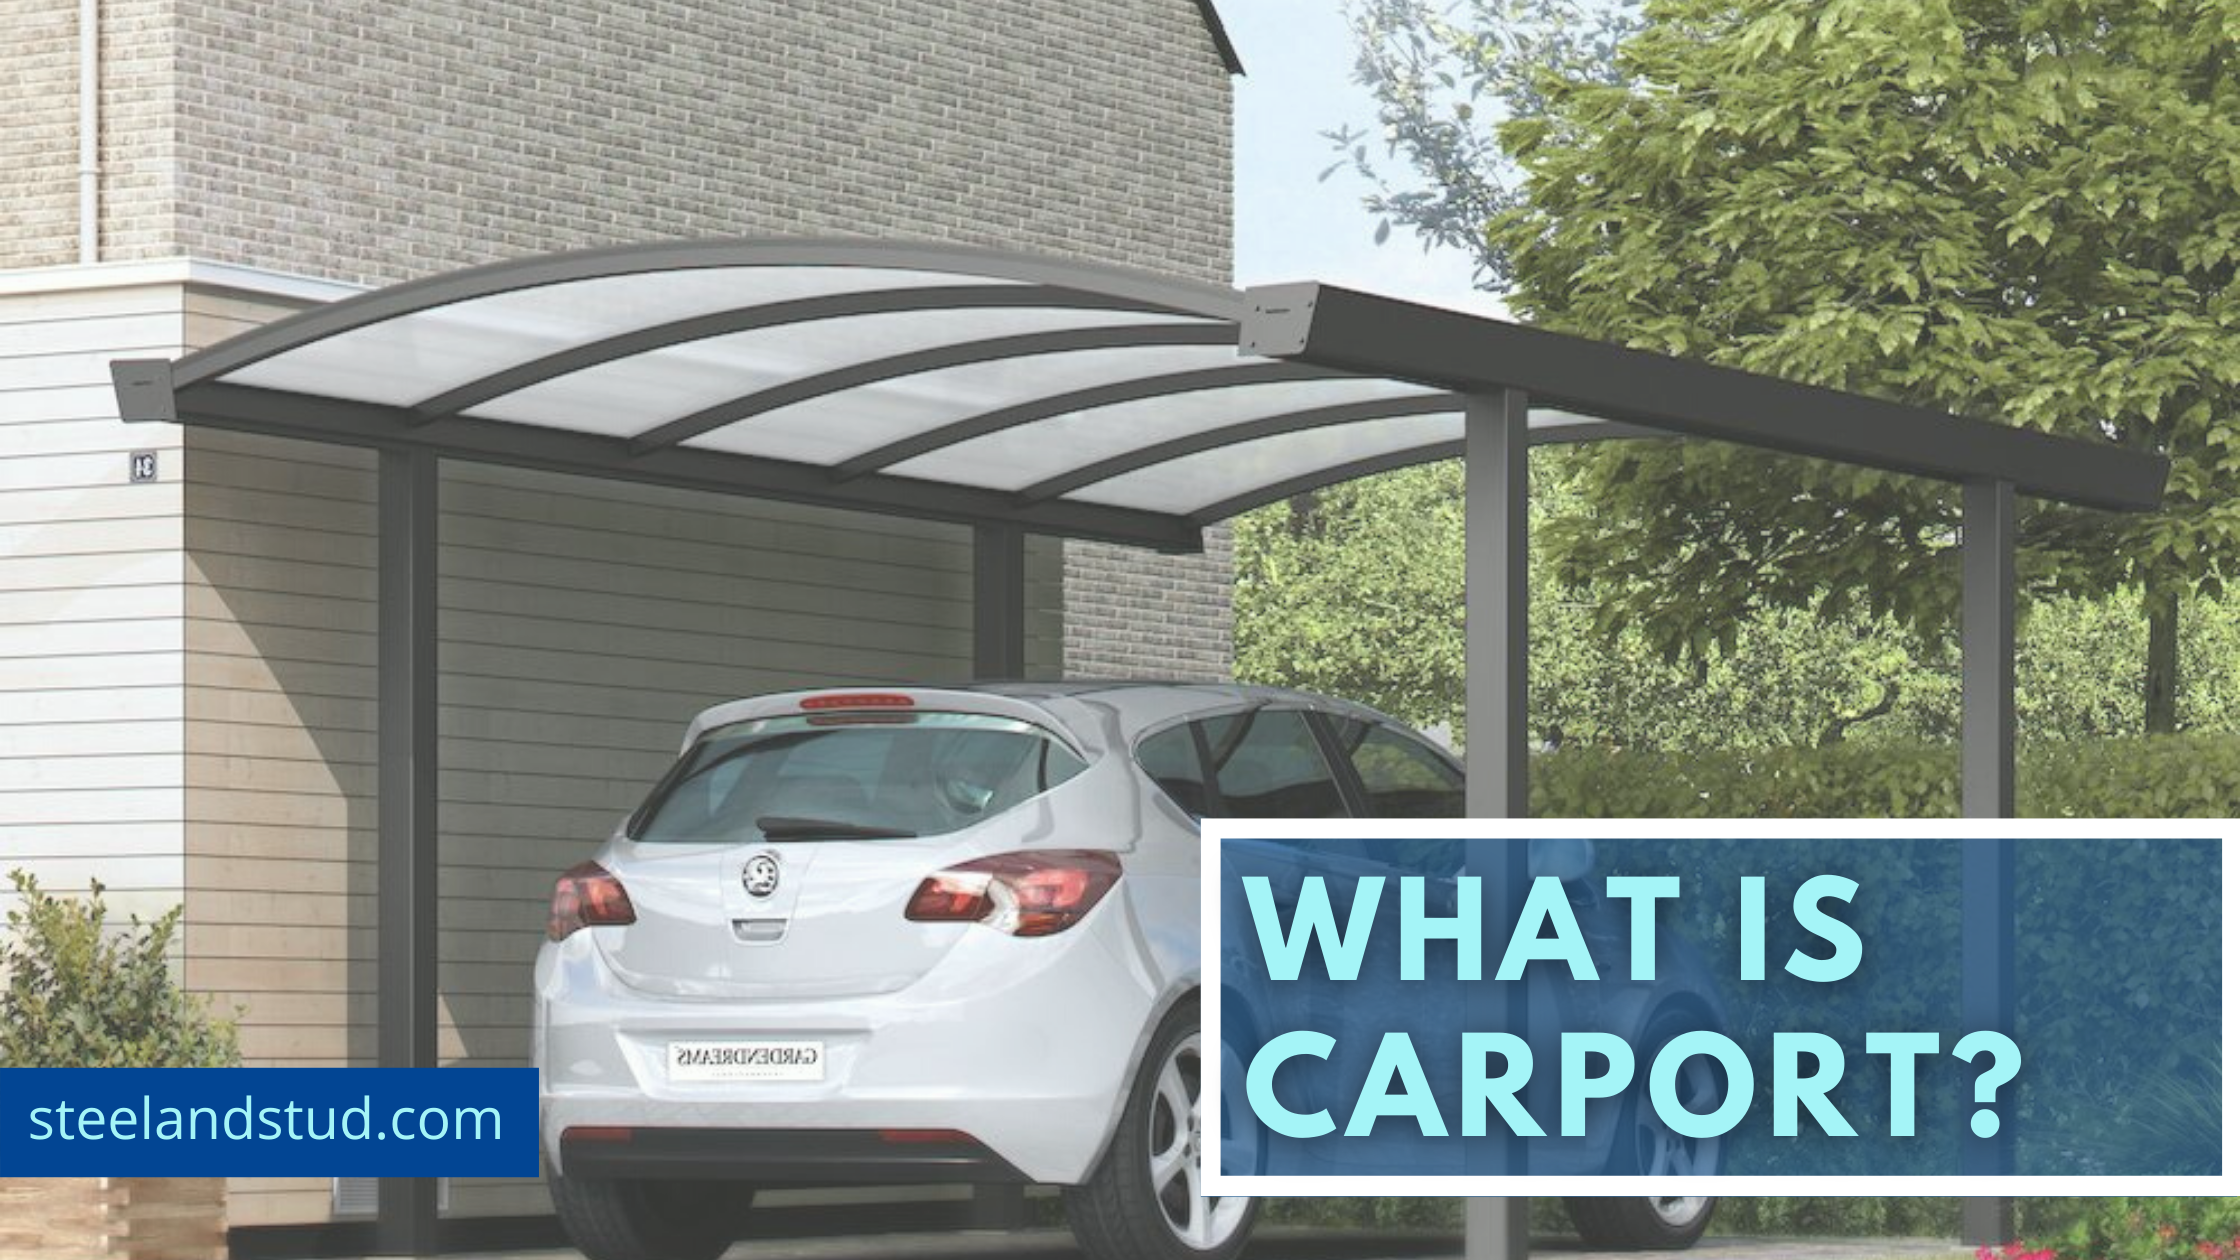 WHAT IS CARPORT?